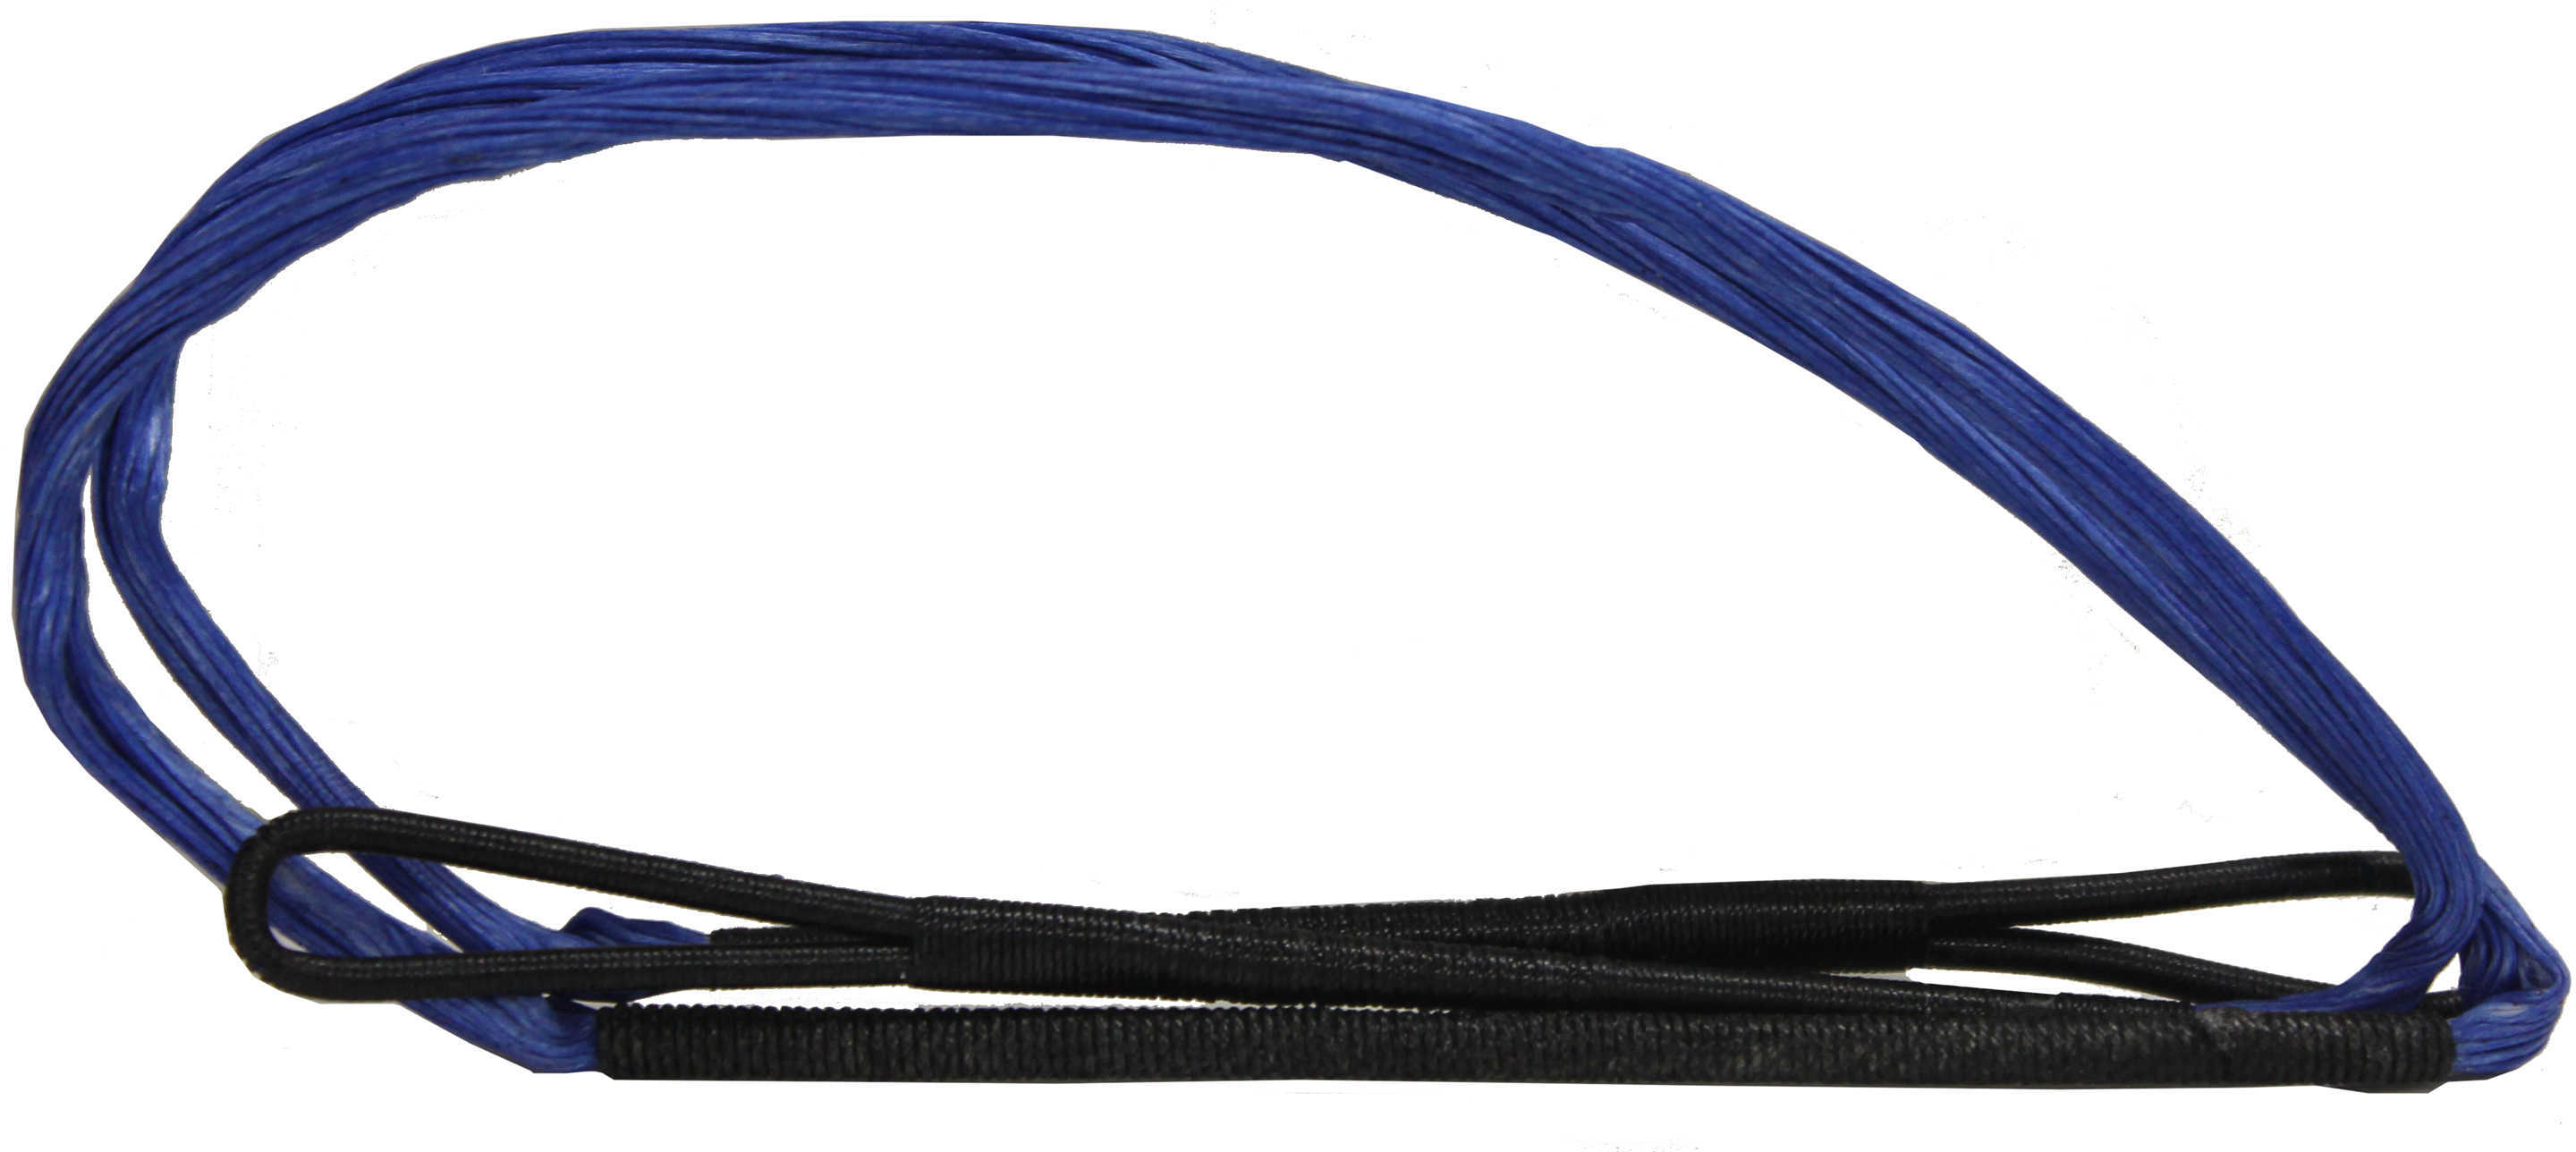 Excalibur Matrix String Stingray Blue Md: 1992Sb